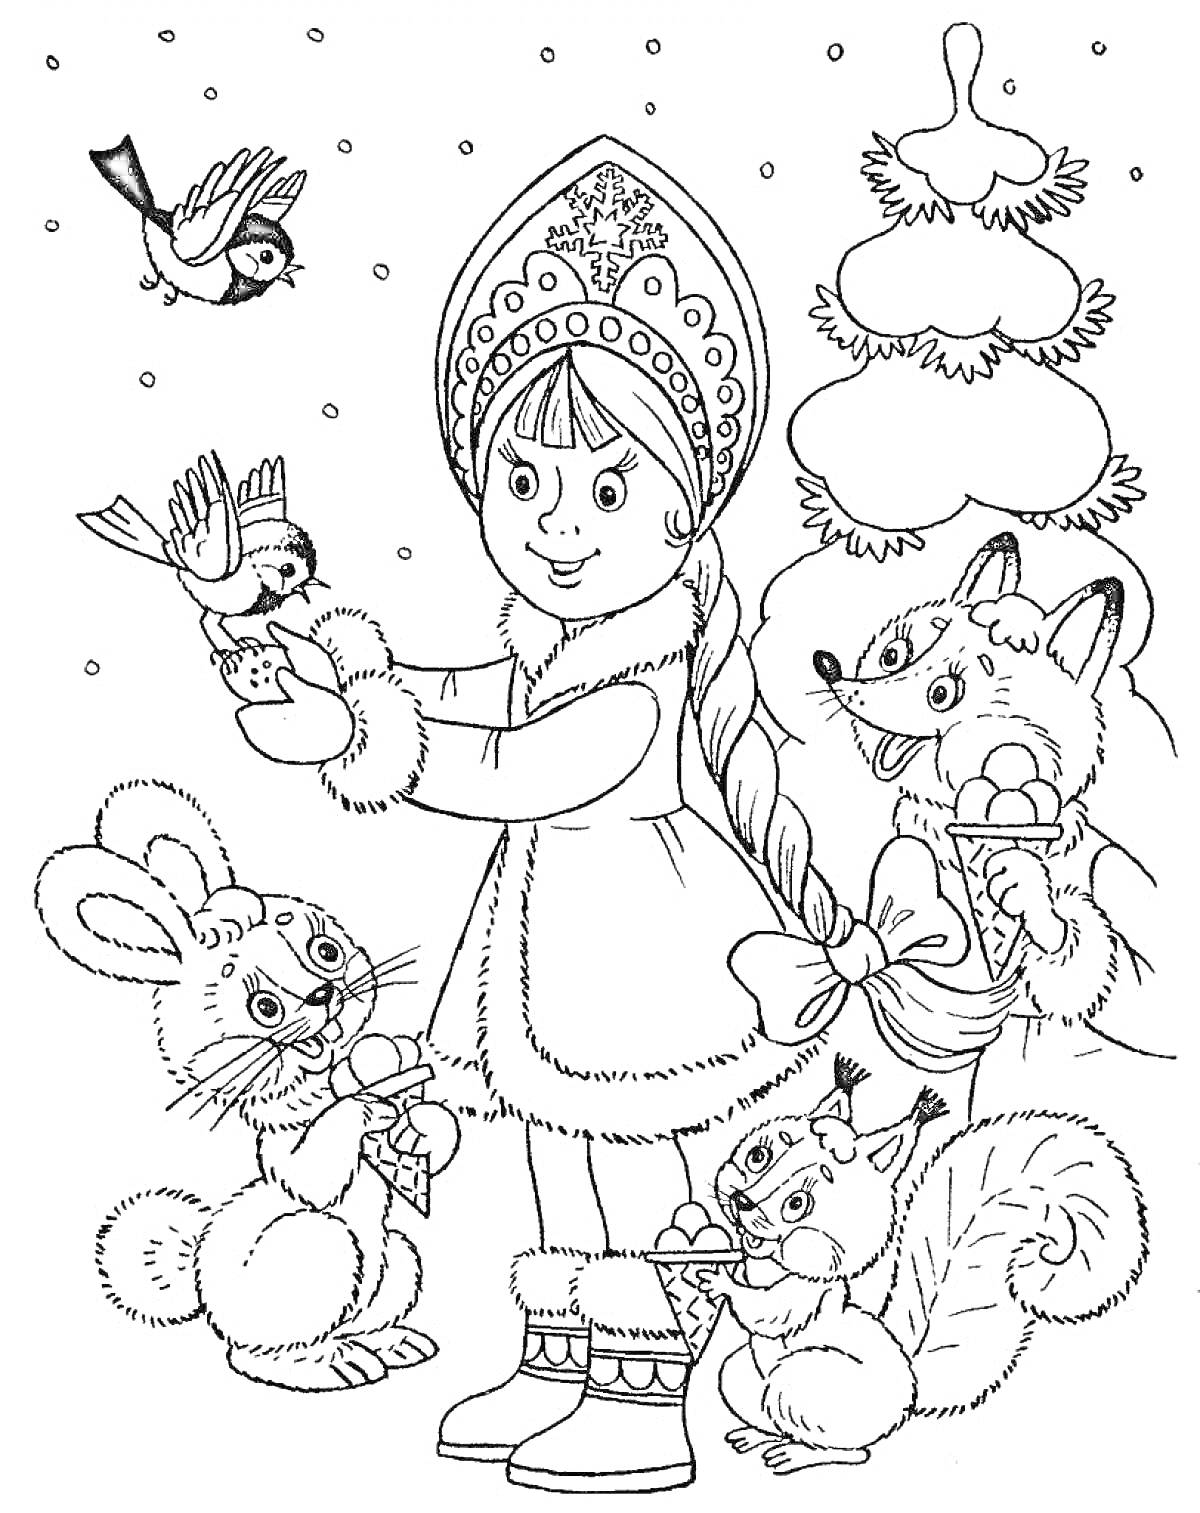 Раскраска Девочка в наряде Снегурочки кормит птиц, рядом лиса, белка, заяц, ёлка